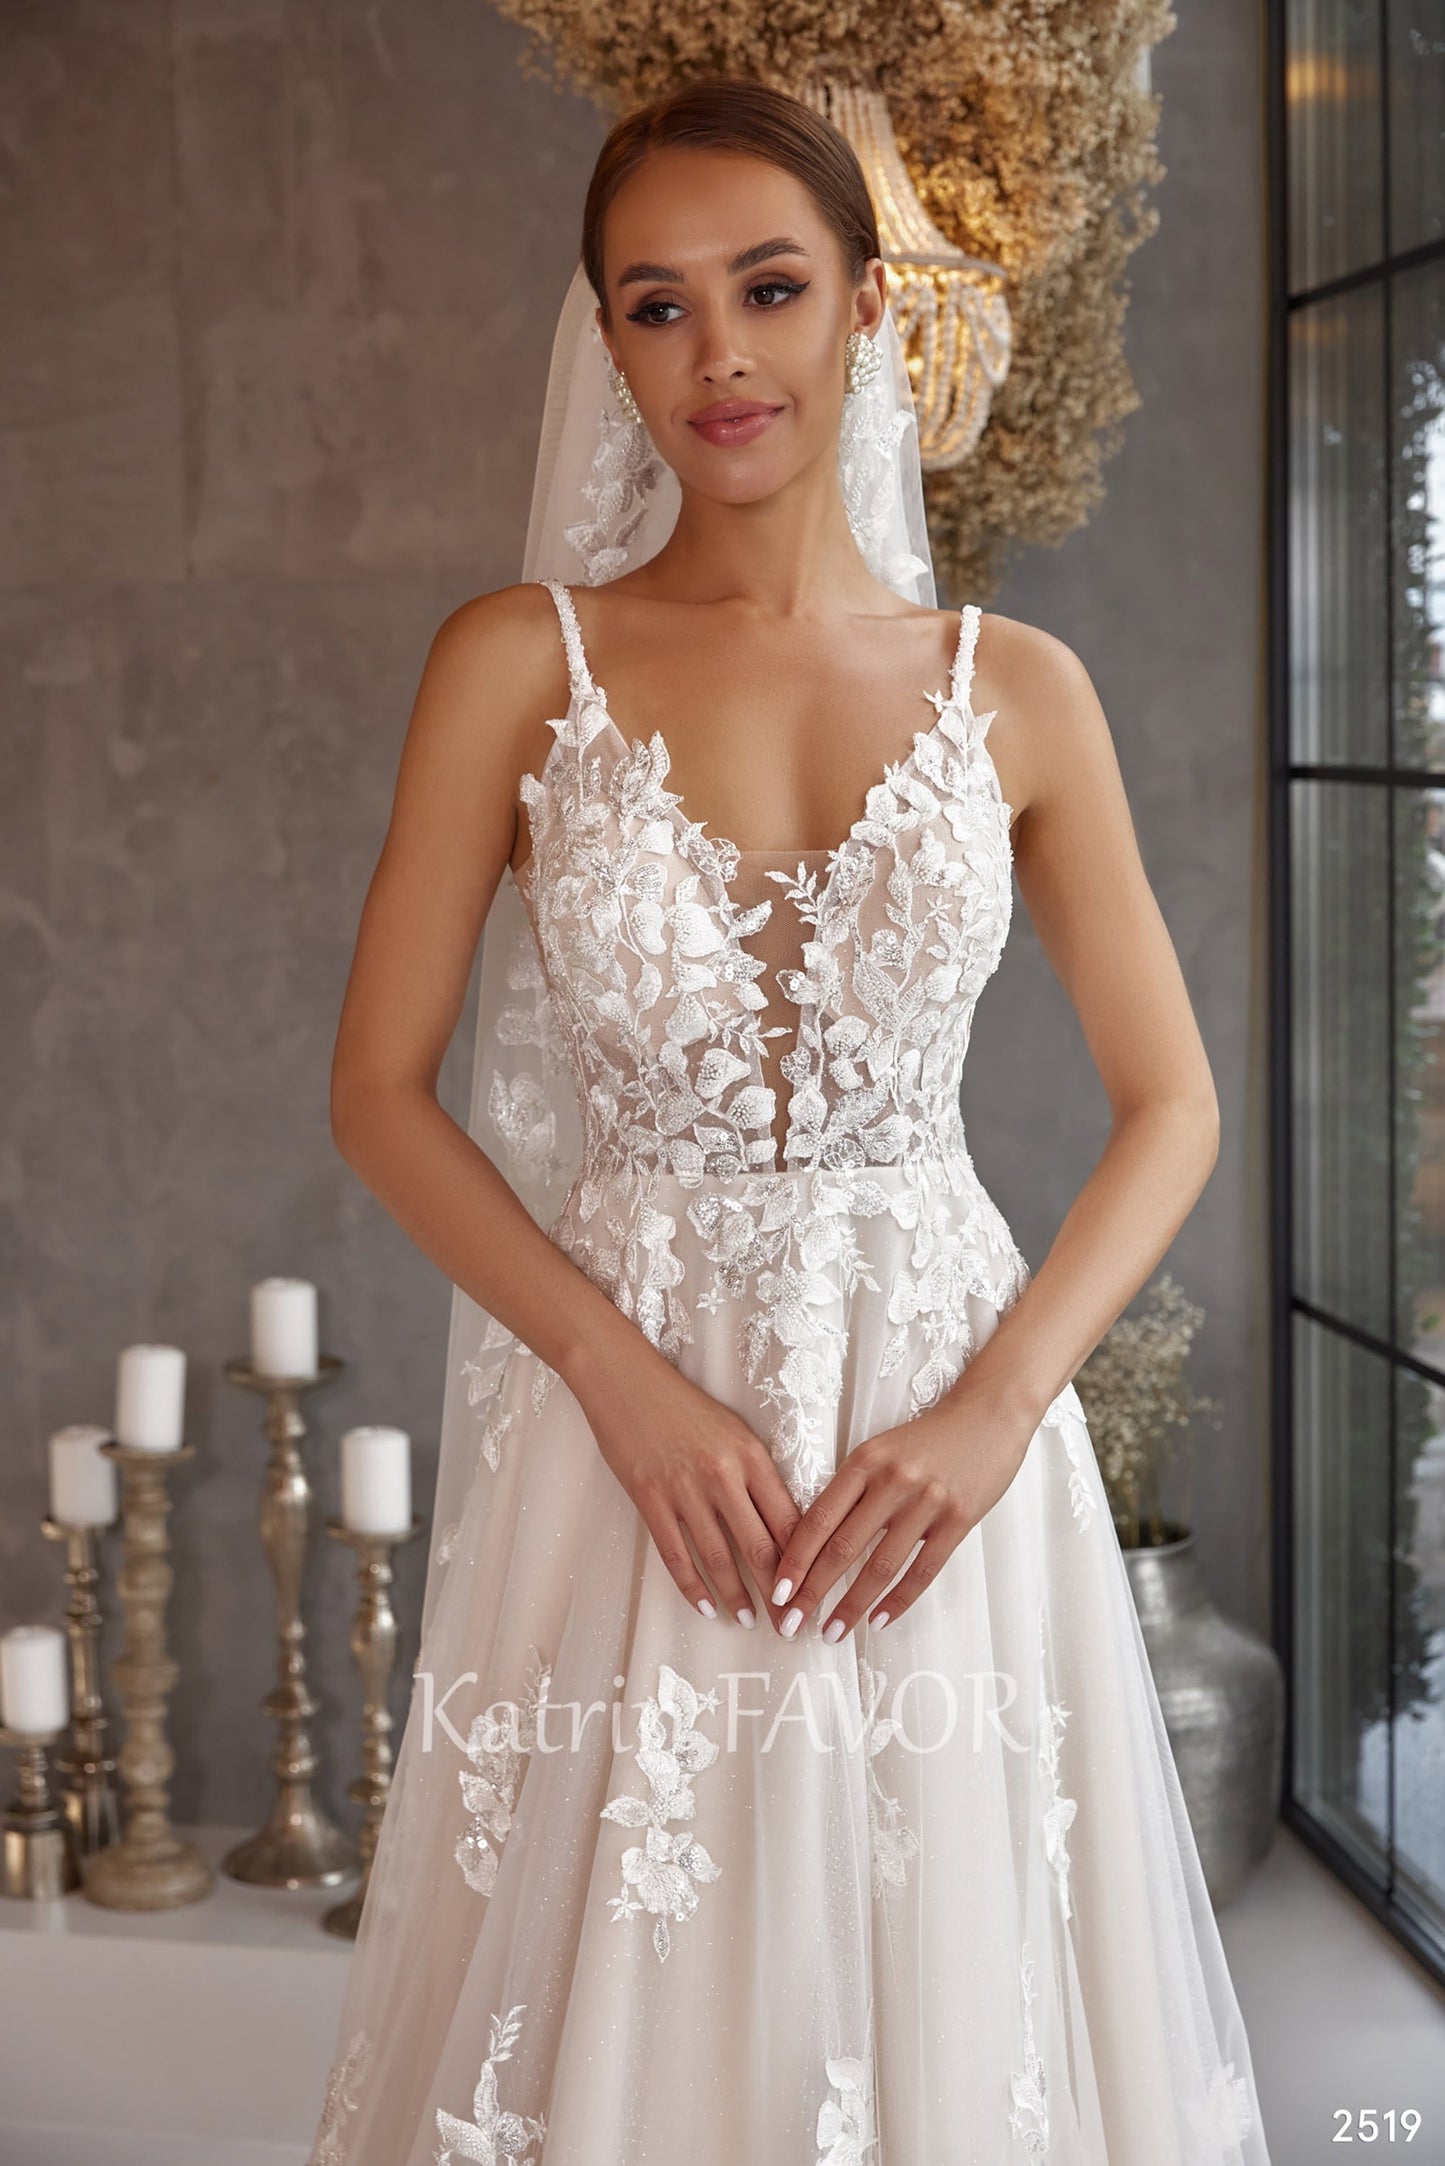 KatrinFAVORboutique-Spaghetti straps a-line beach wedding dress